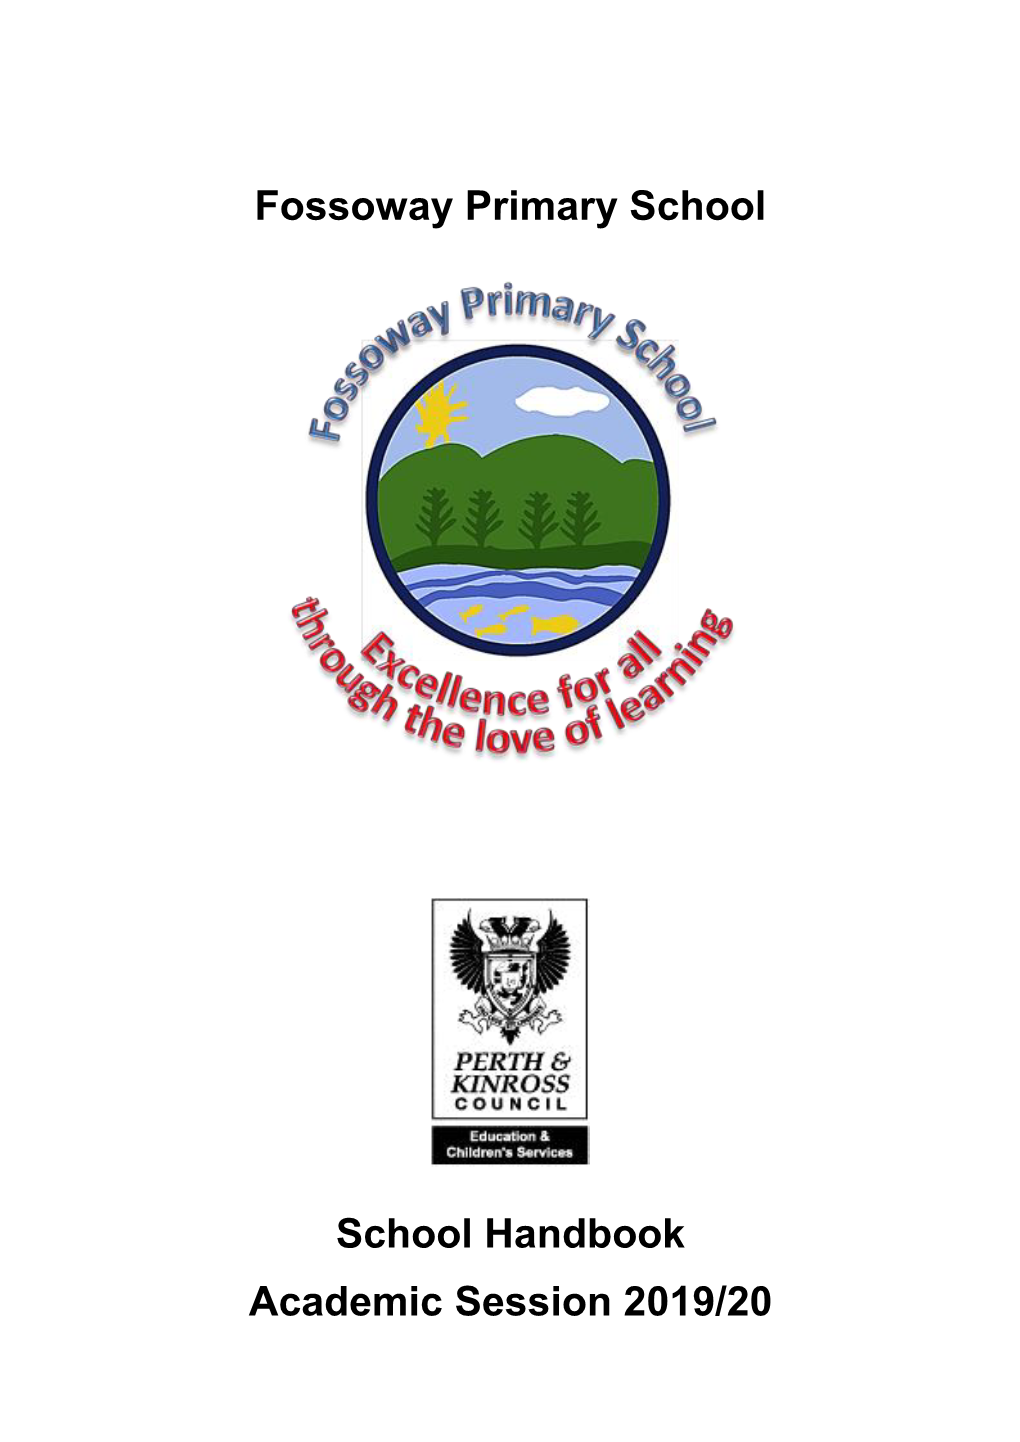 Fossoway Primary School School Handbook Academic Session 2019